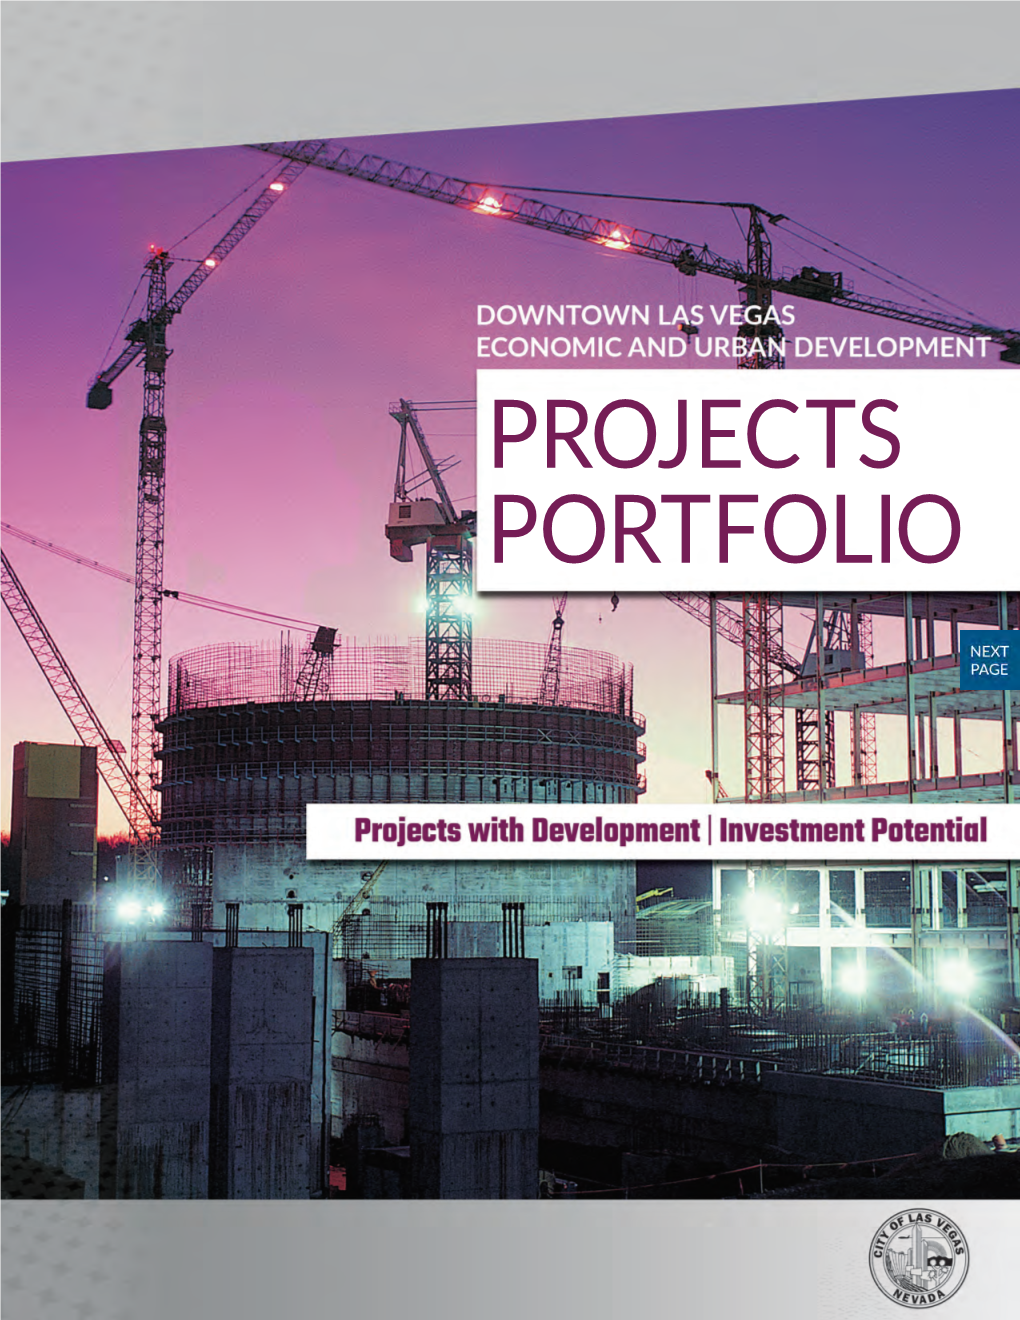 Projects Portfolio (Former) Bill Heard Property